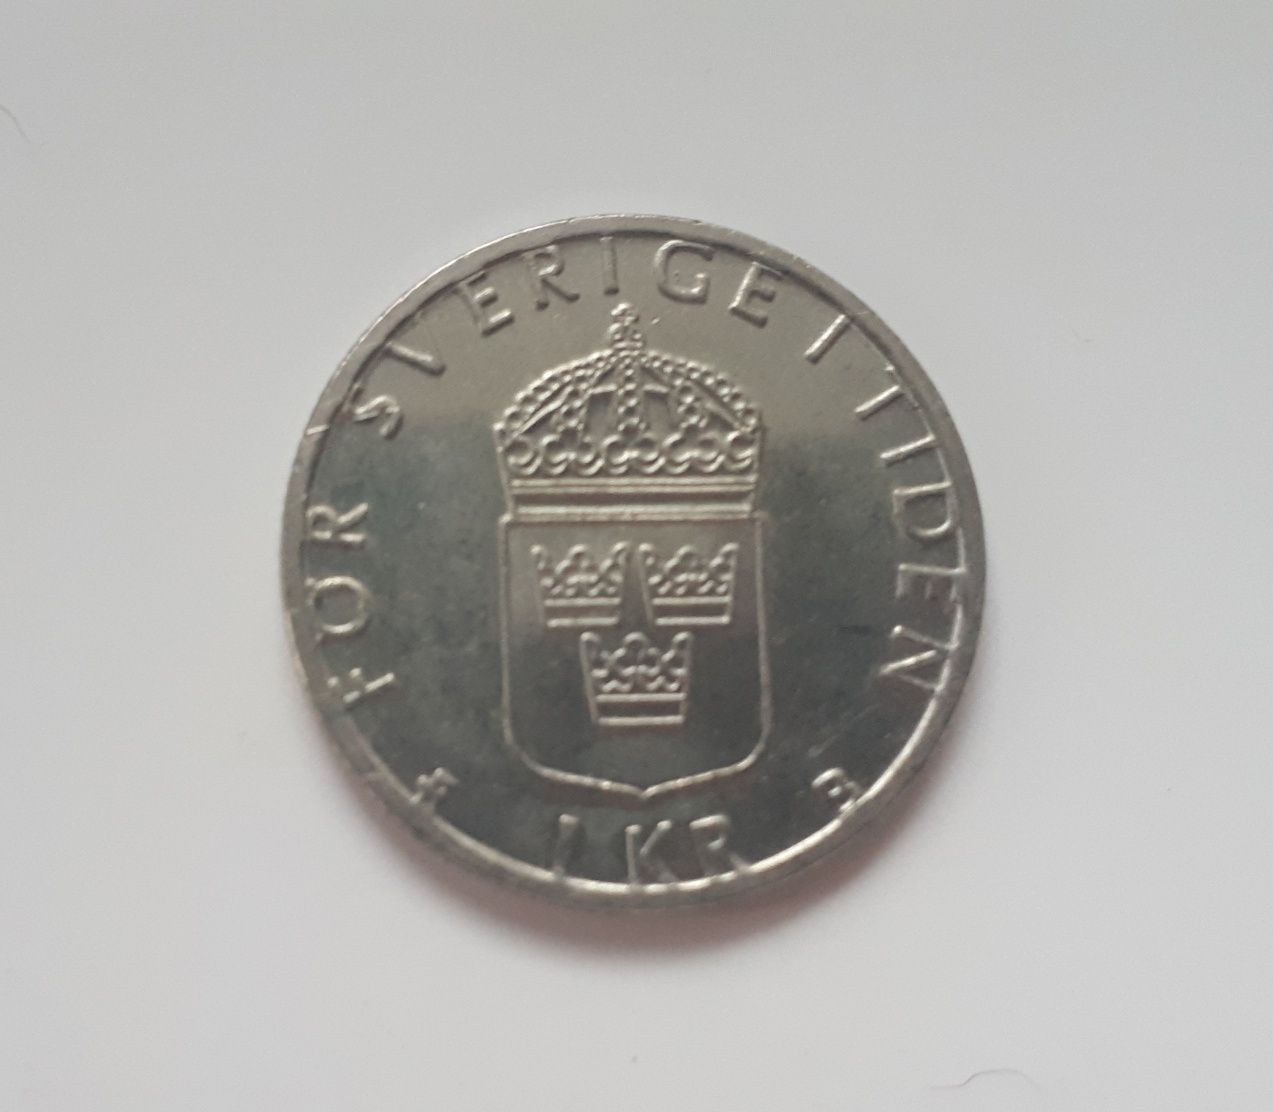 Szwecja moneta 1 korona 2000 r.